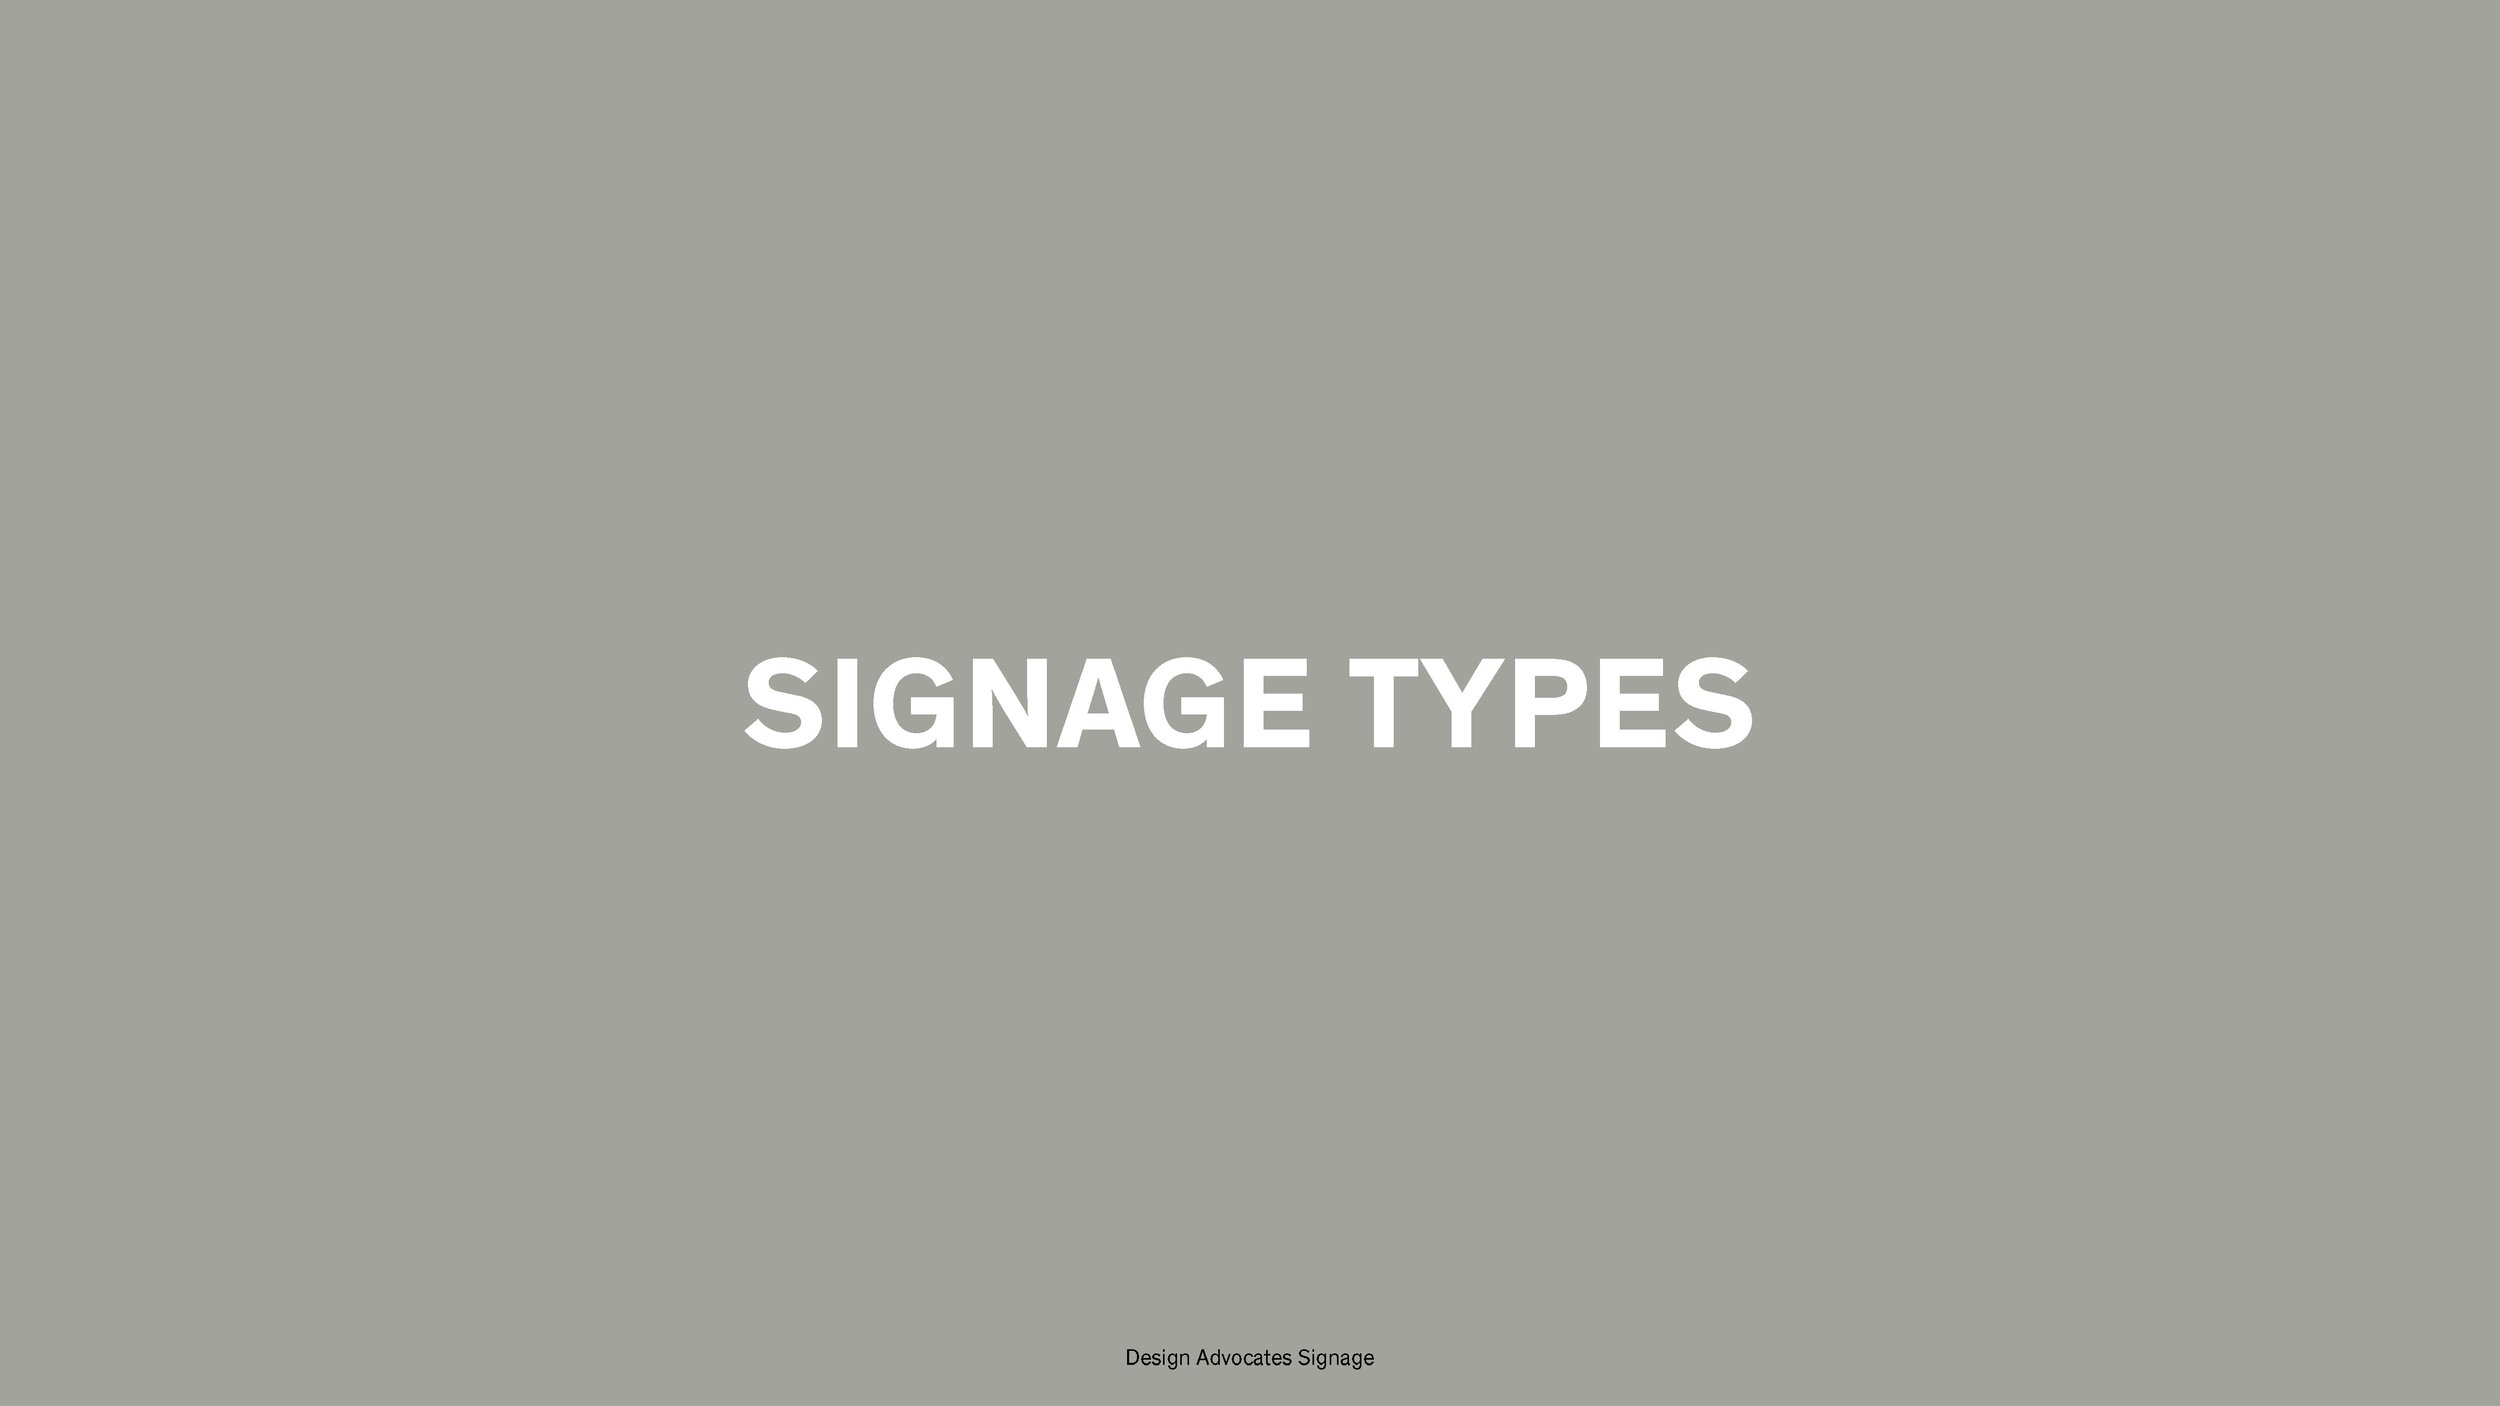 Design Advocates Signage_Page_02.jpg